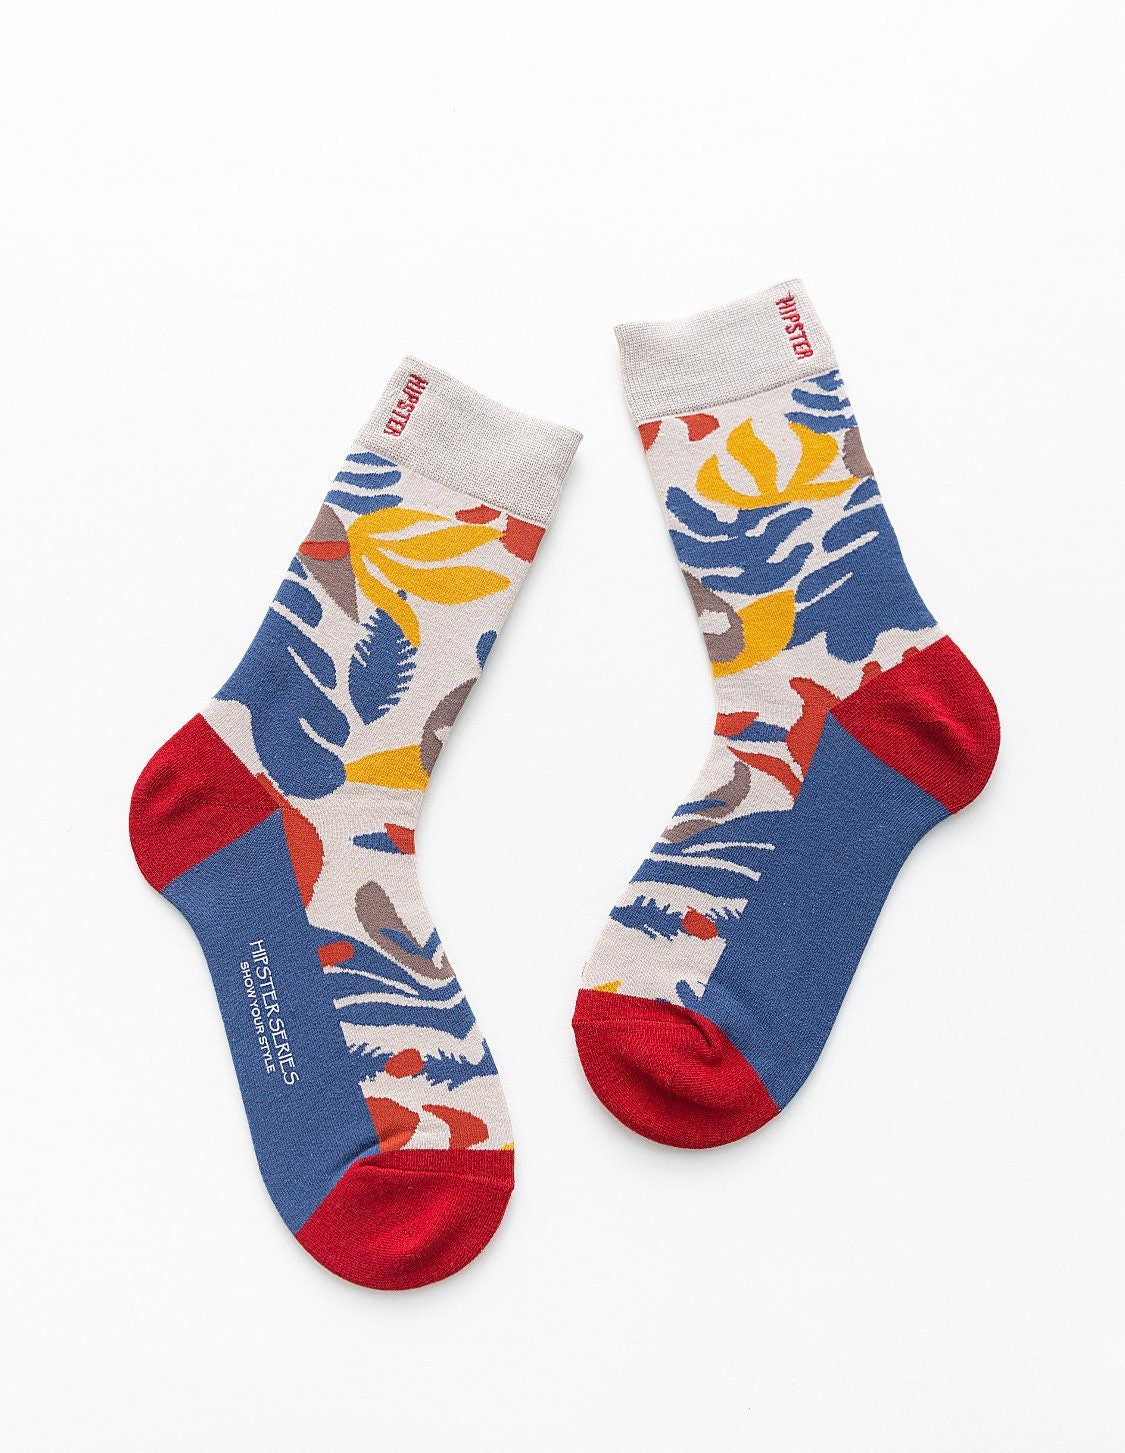 Miss June’s | Set 3 pairs cotton socks｜Creative | Colorful | Cool | Patterned | Designed | Unisex | Gift Idea | Art | Comfortable｜Men|